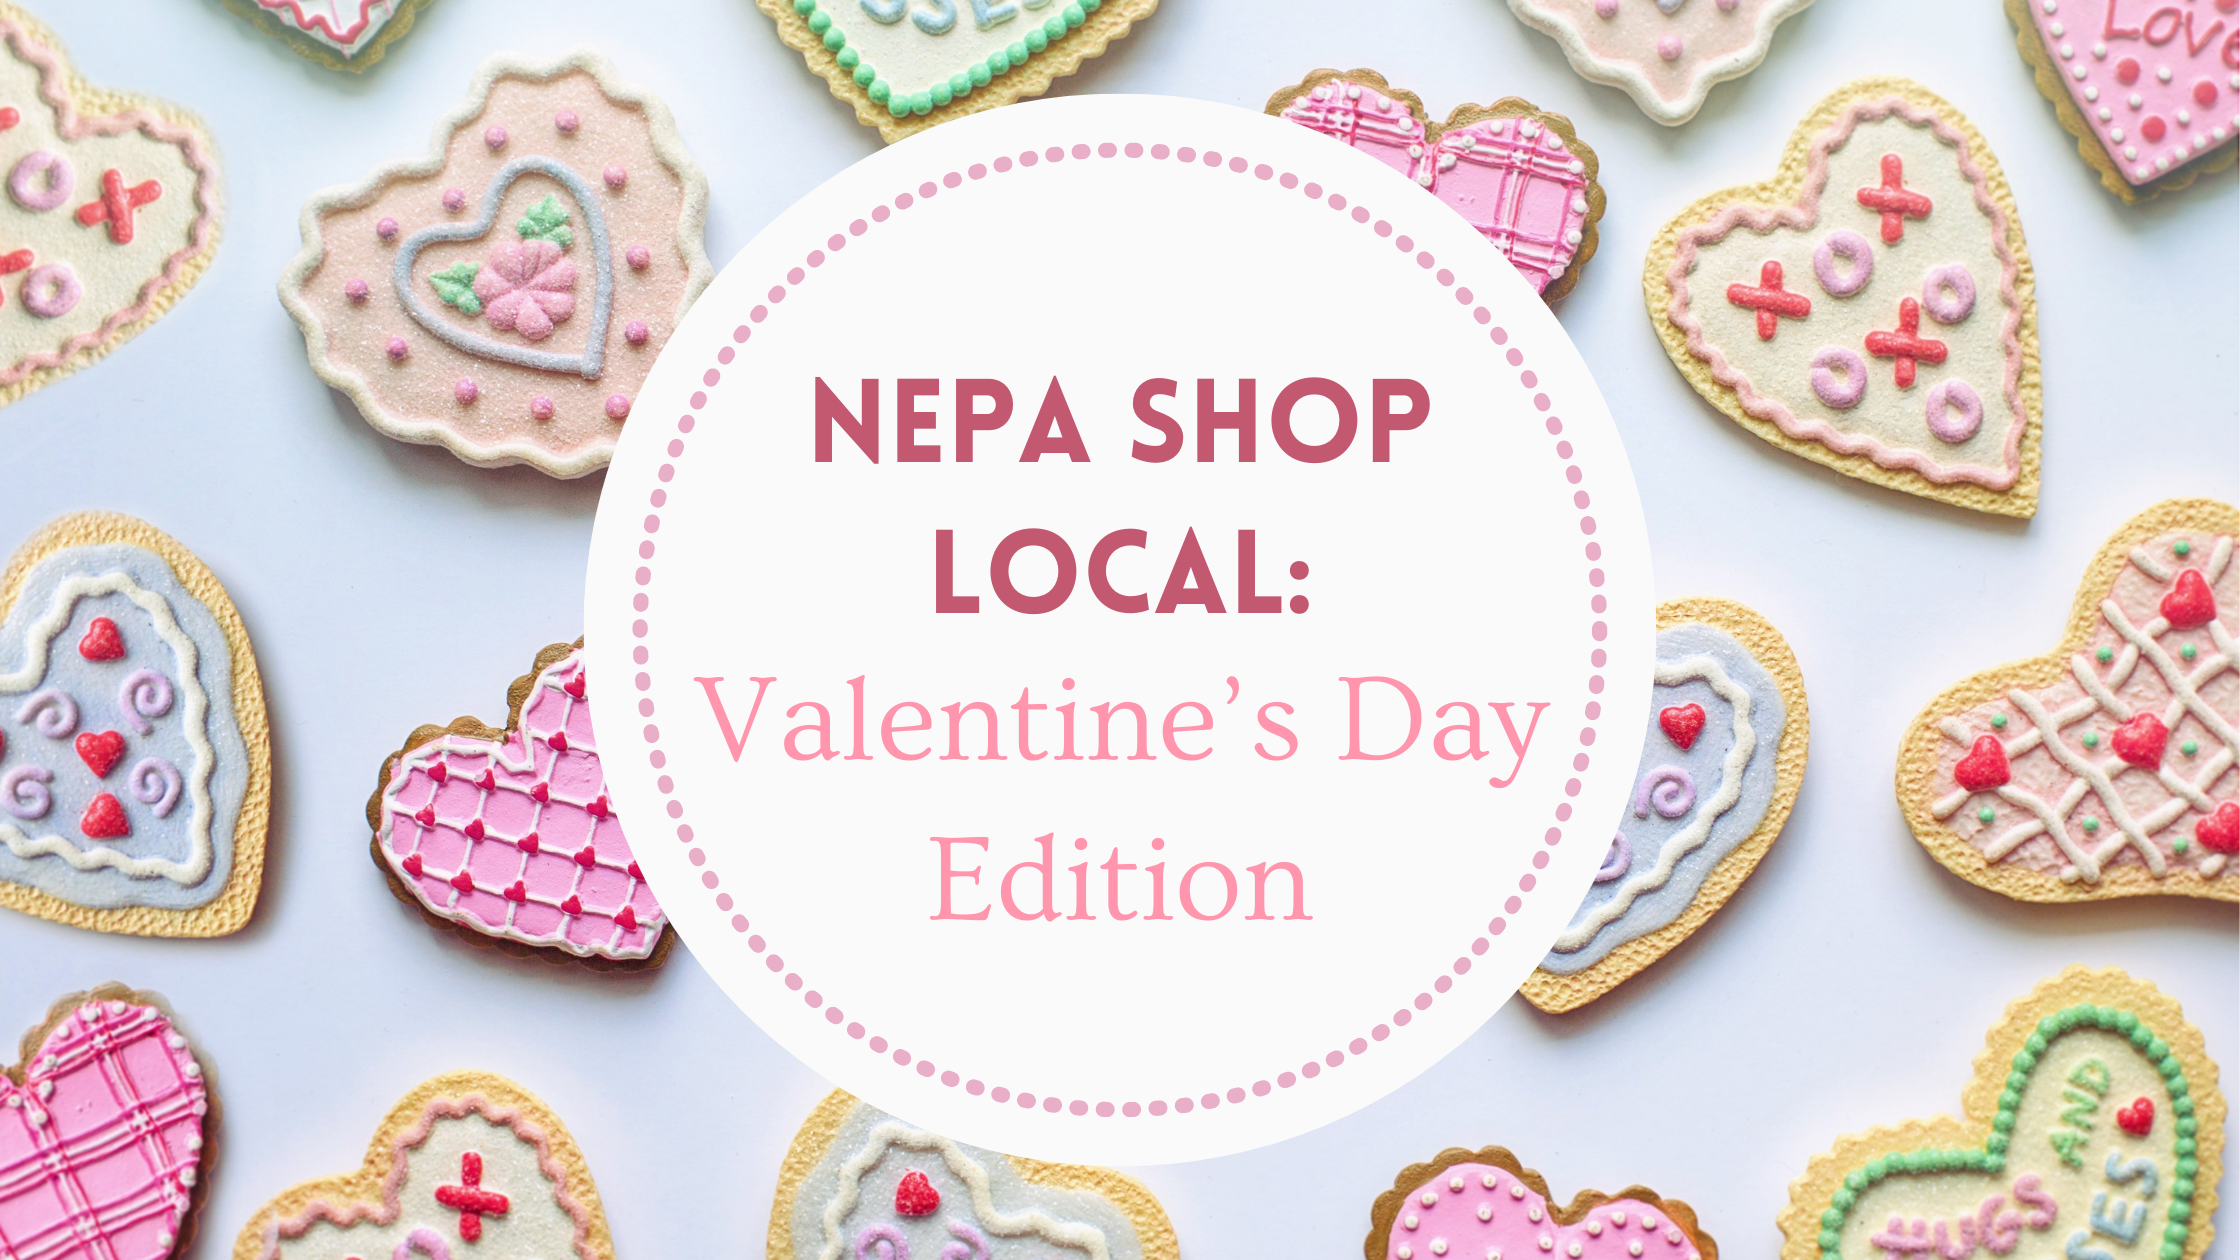 NEPA Shop Local: Valentine’s Day Edition